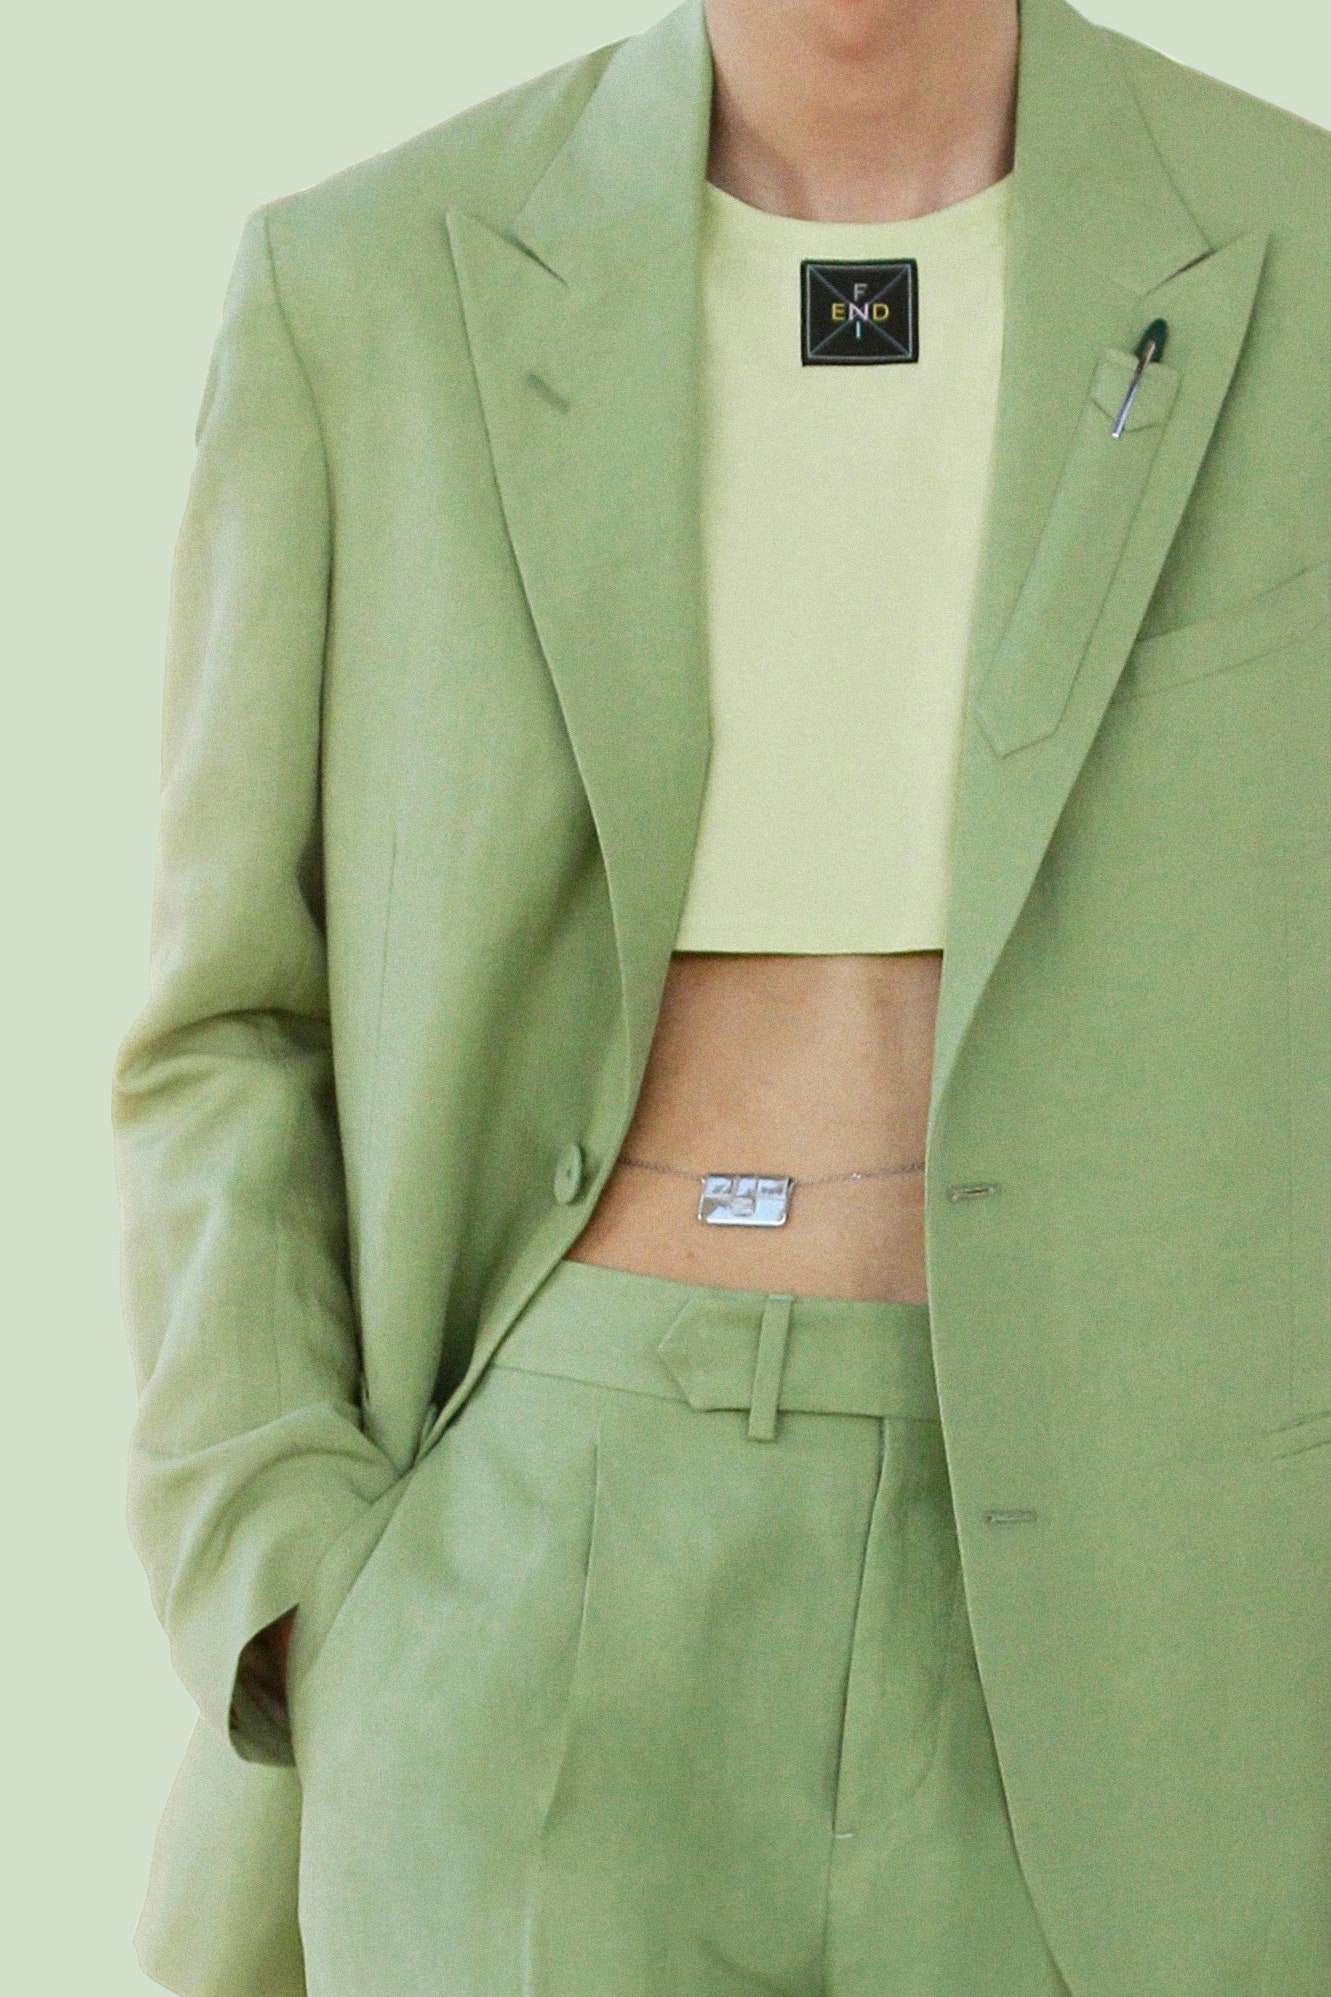 Fendi menswear весна-лето 2022: посмотрите на пояс-цепочку с сумкой Baguette из новой коллекции Сильвии Вентурини Фенди